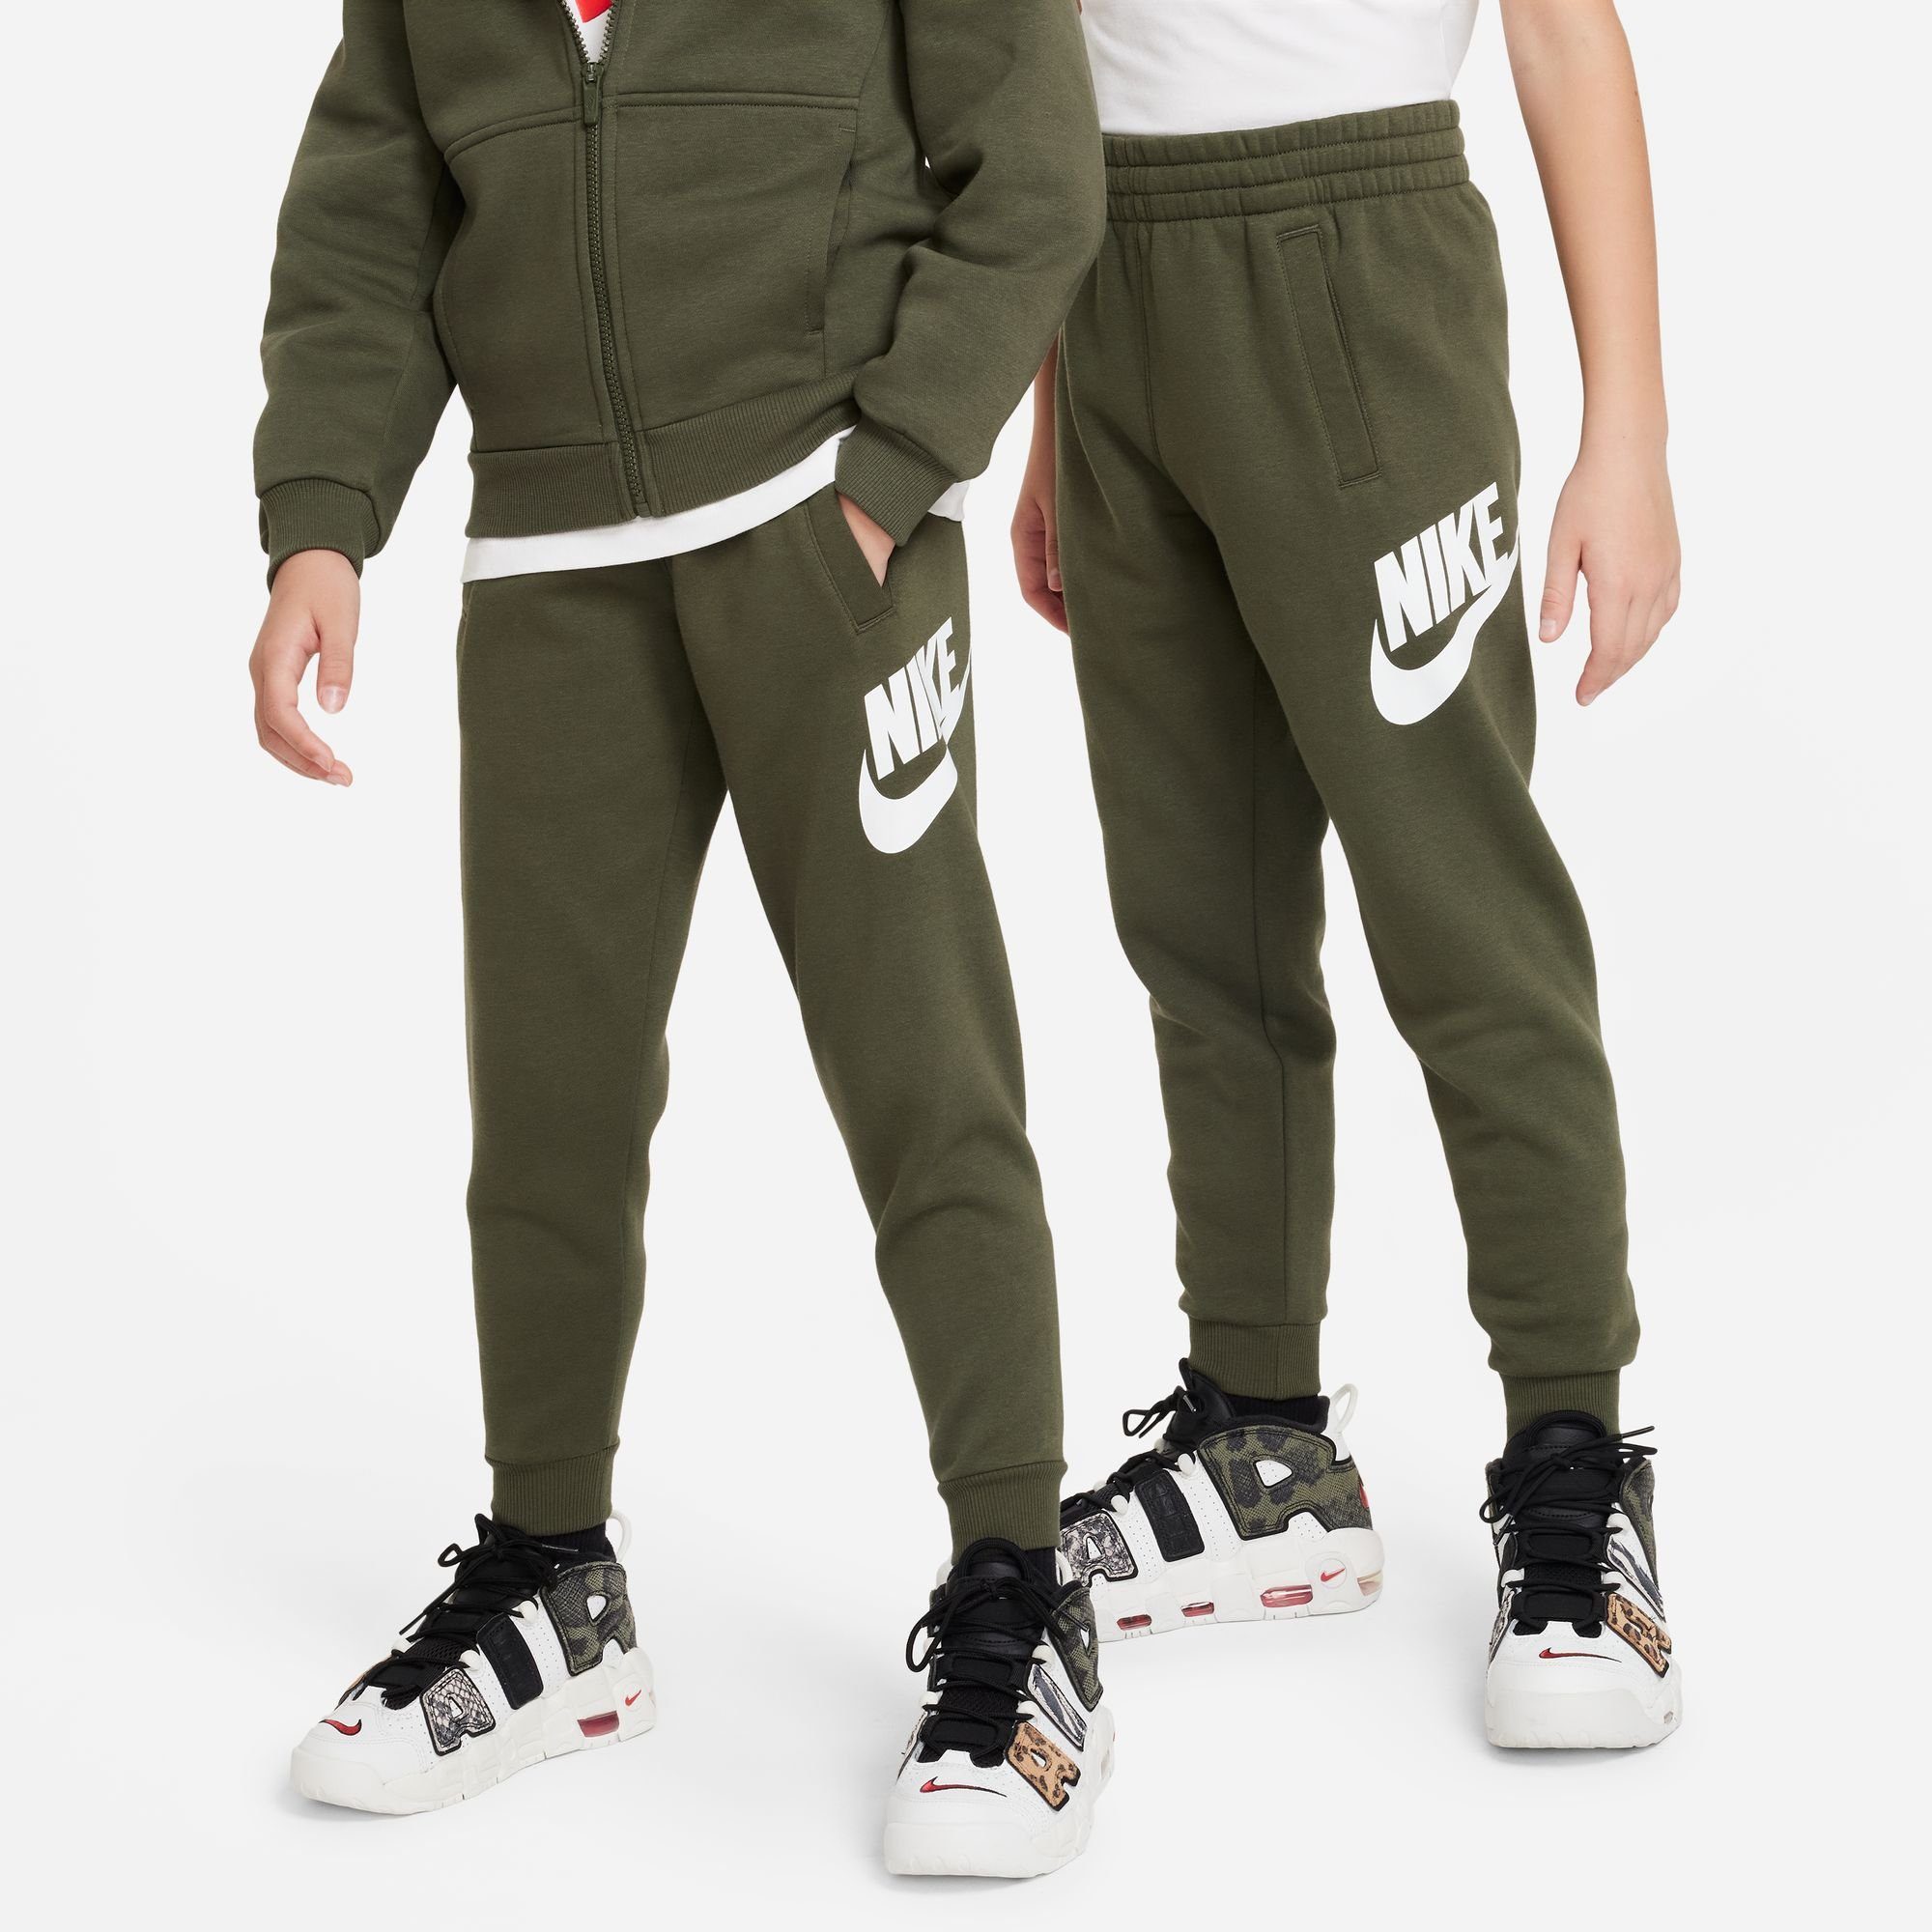 CLUB Sportswear Nike PANTS KIDS' JOGGER KHAKI/WHITE CARGO FLEECE Jogginghose BIG